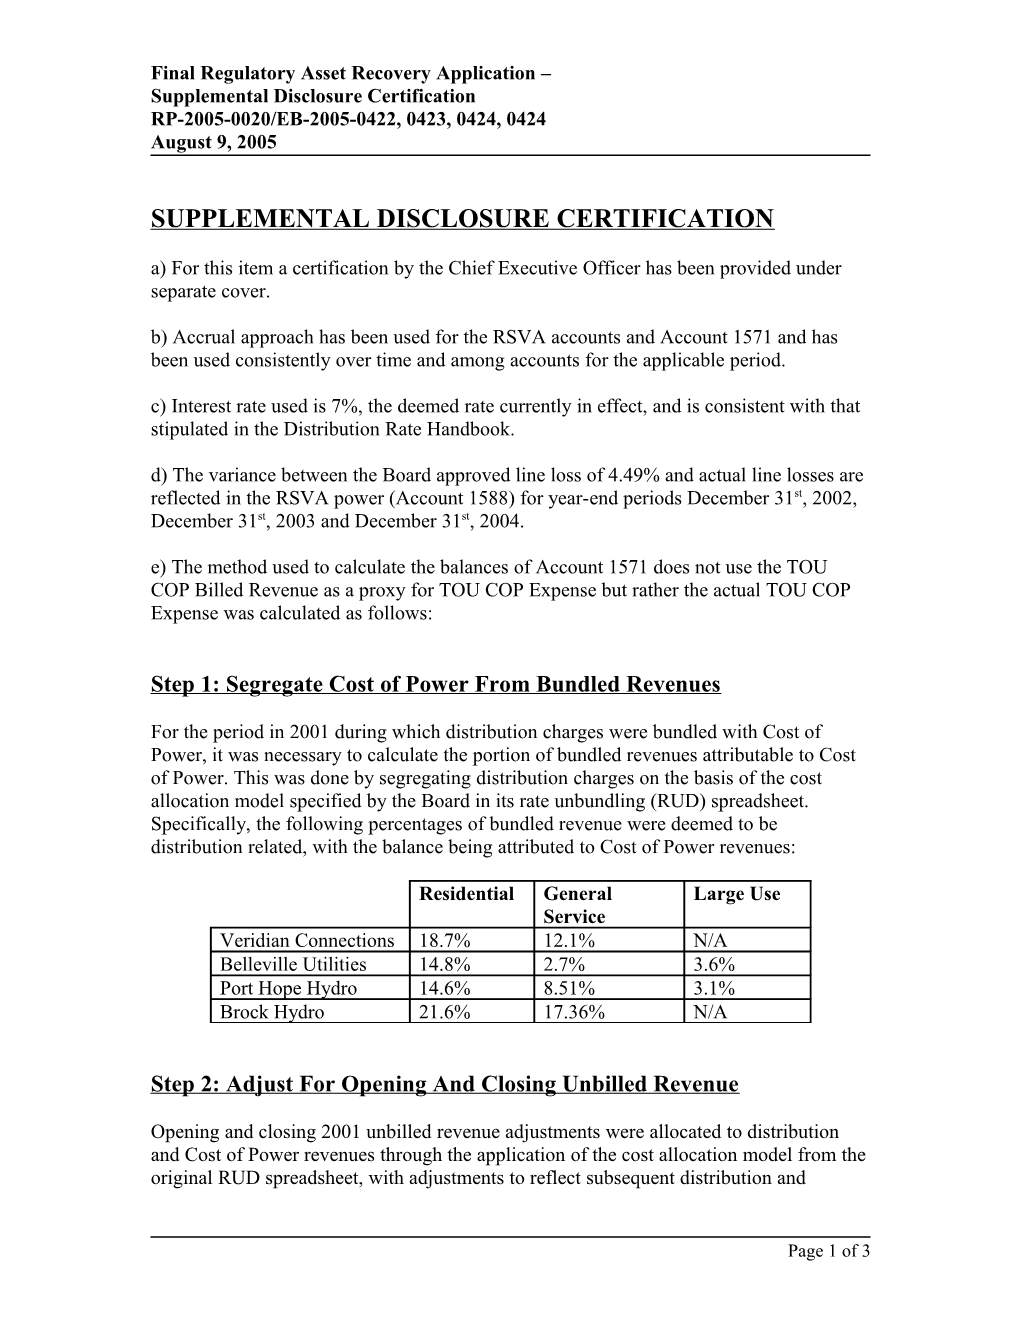 Supplemental Disclosure Certification